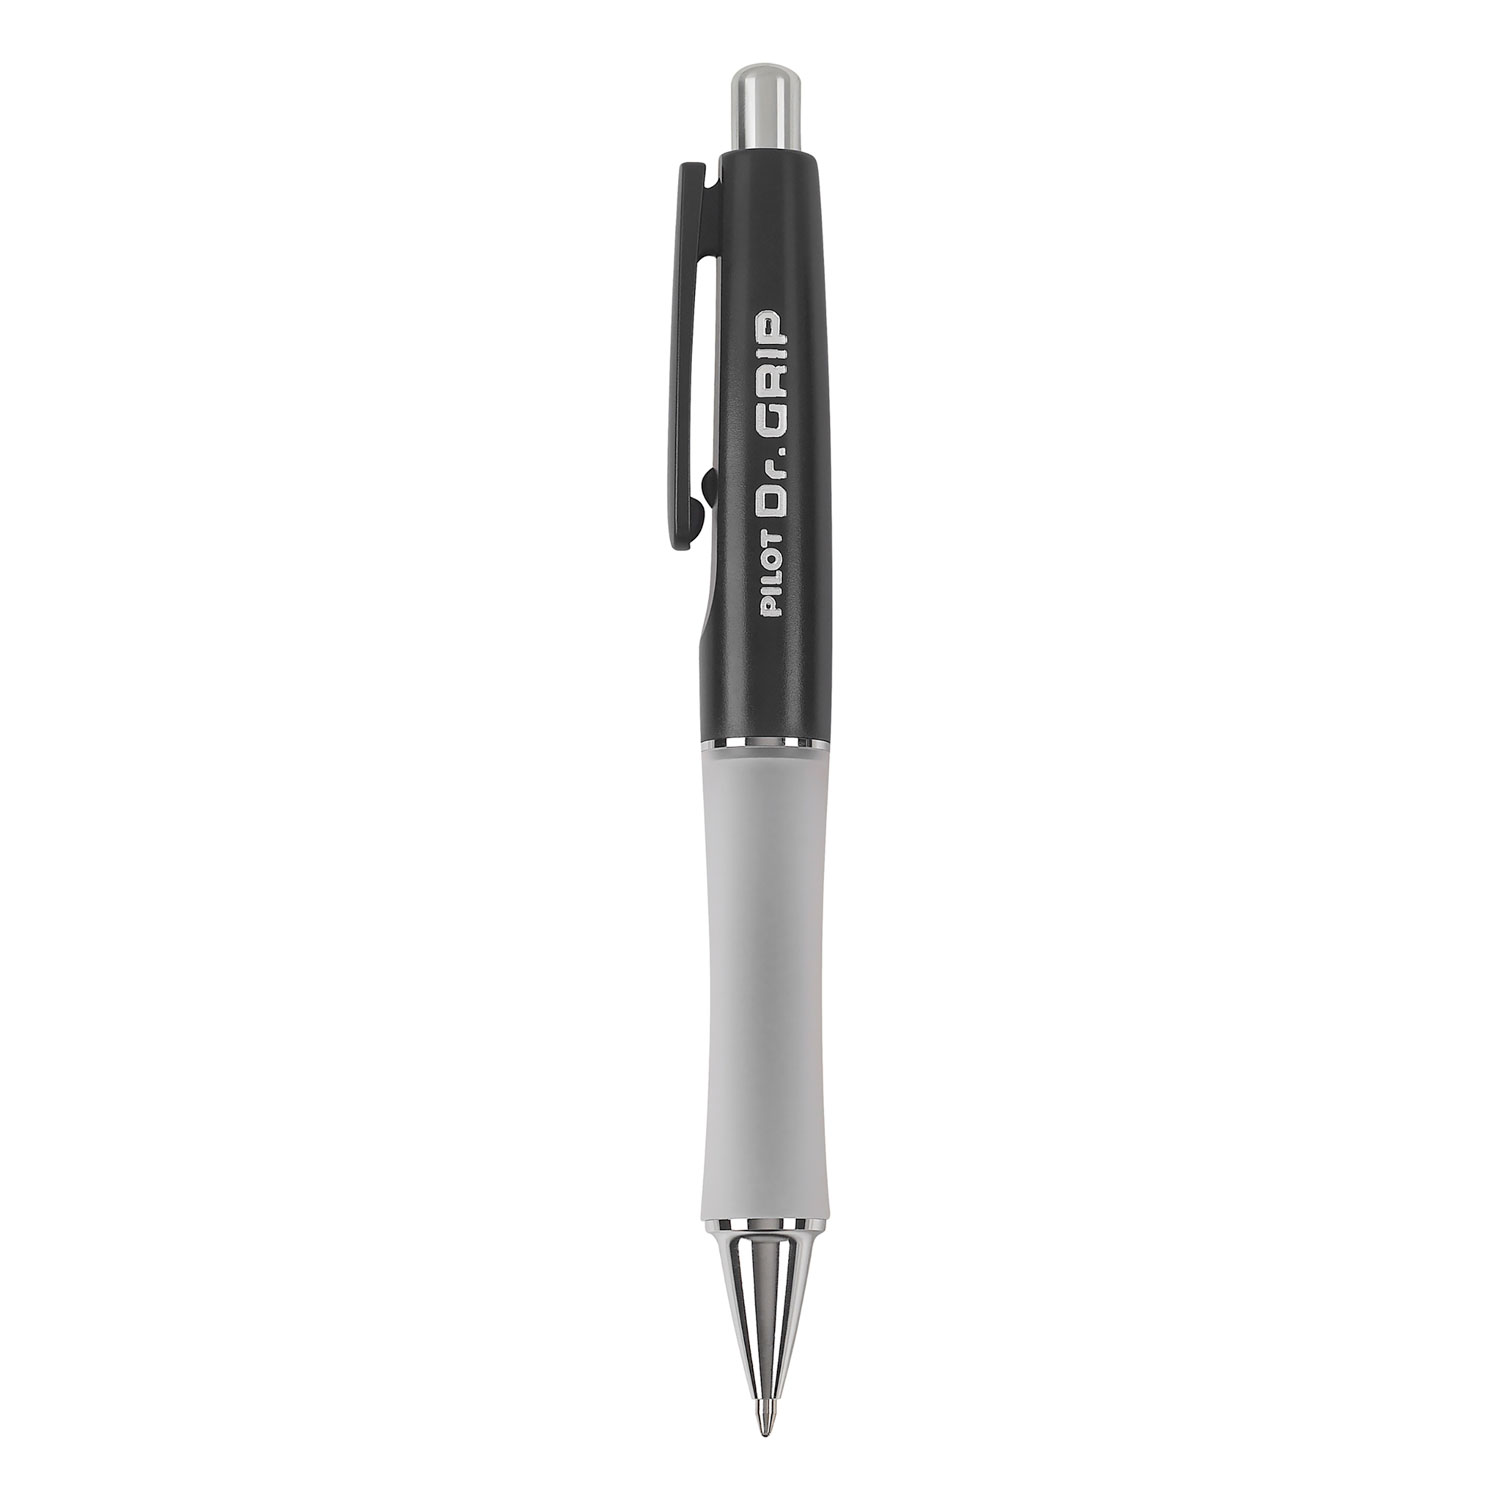  Pilot 36100 Dr. Grip Retractable Ballpoint Pen, Medium 1mm, Black Ink, Black Barrel (PIL36100) 